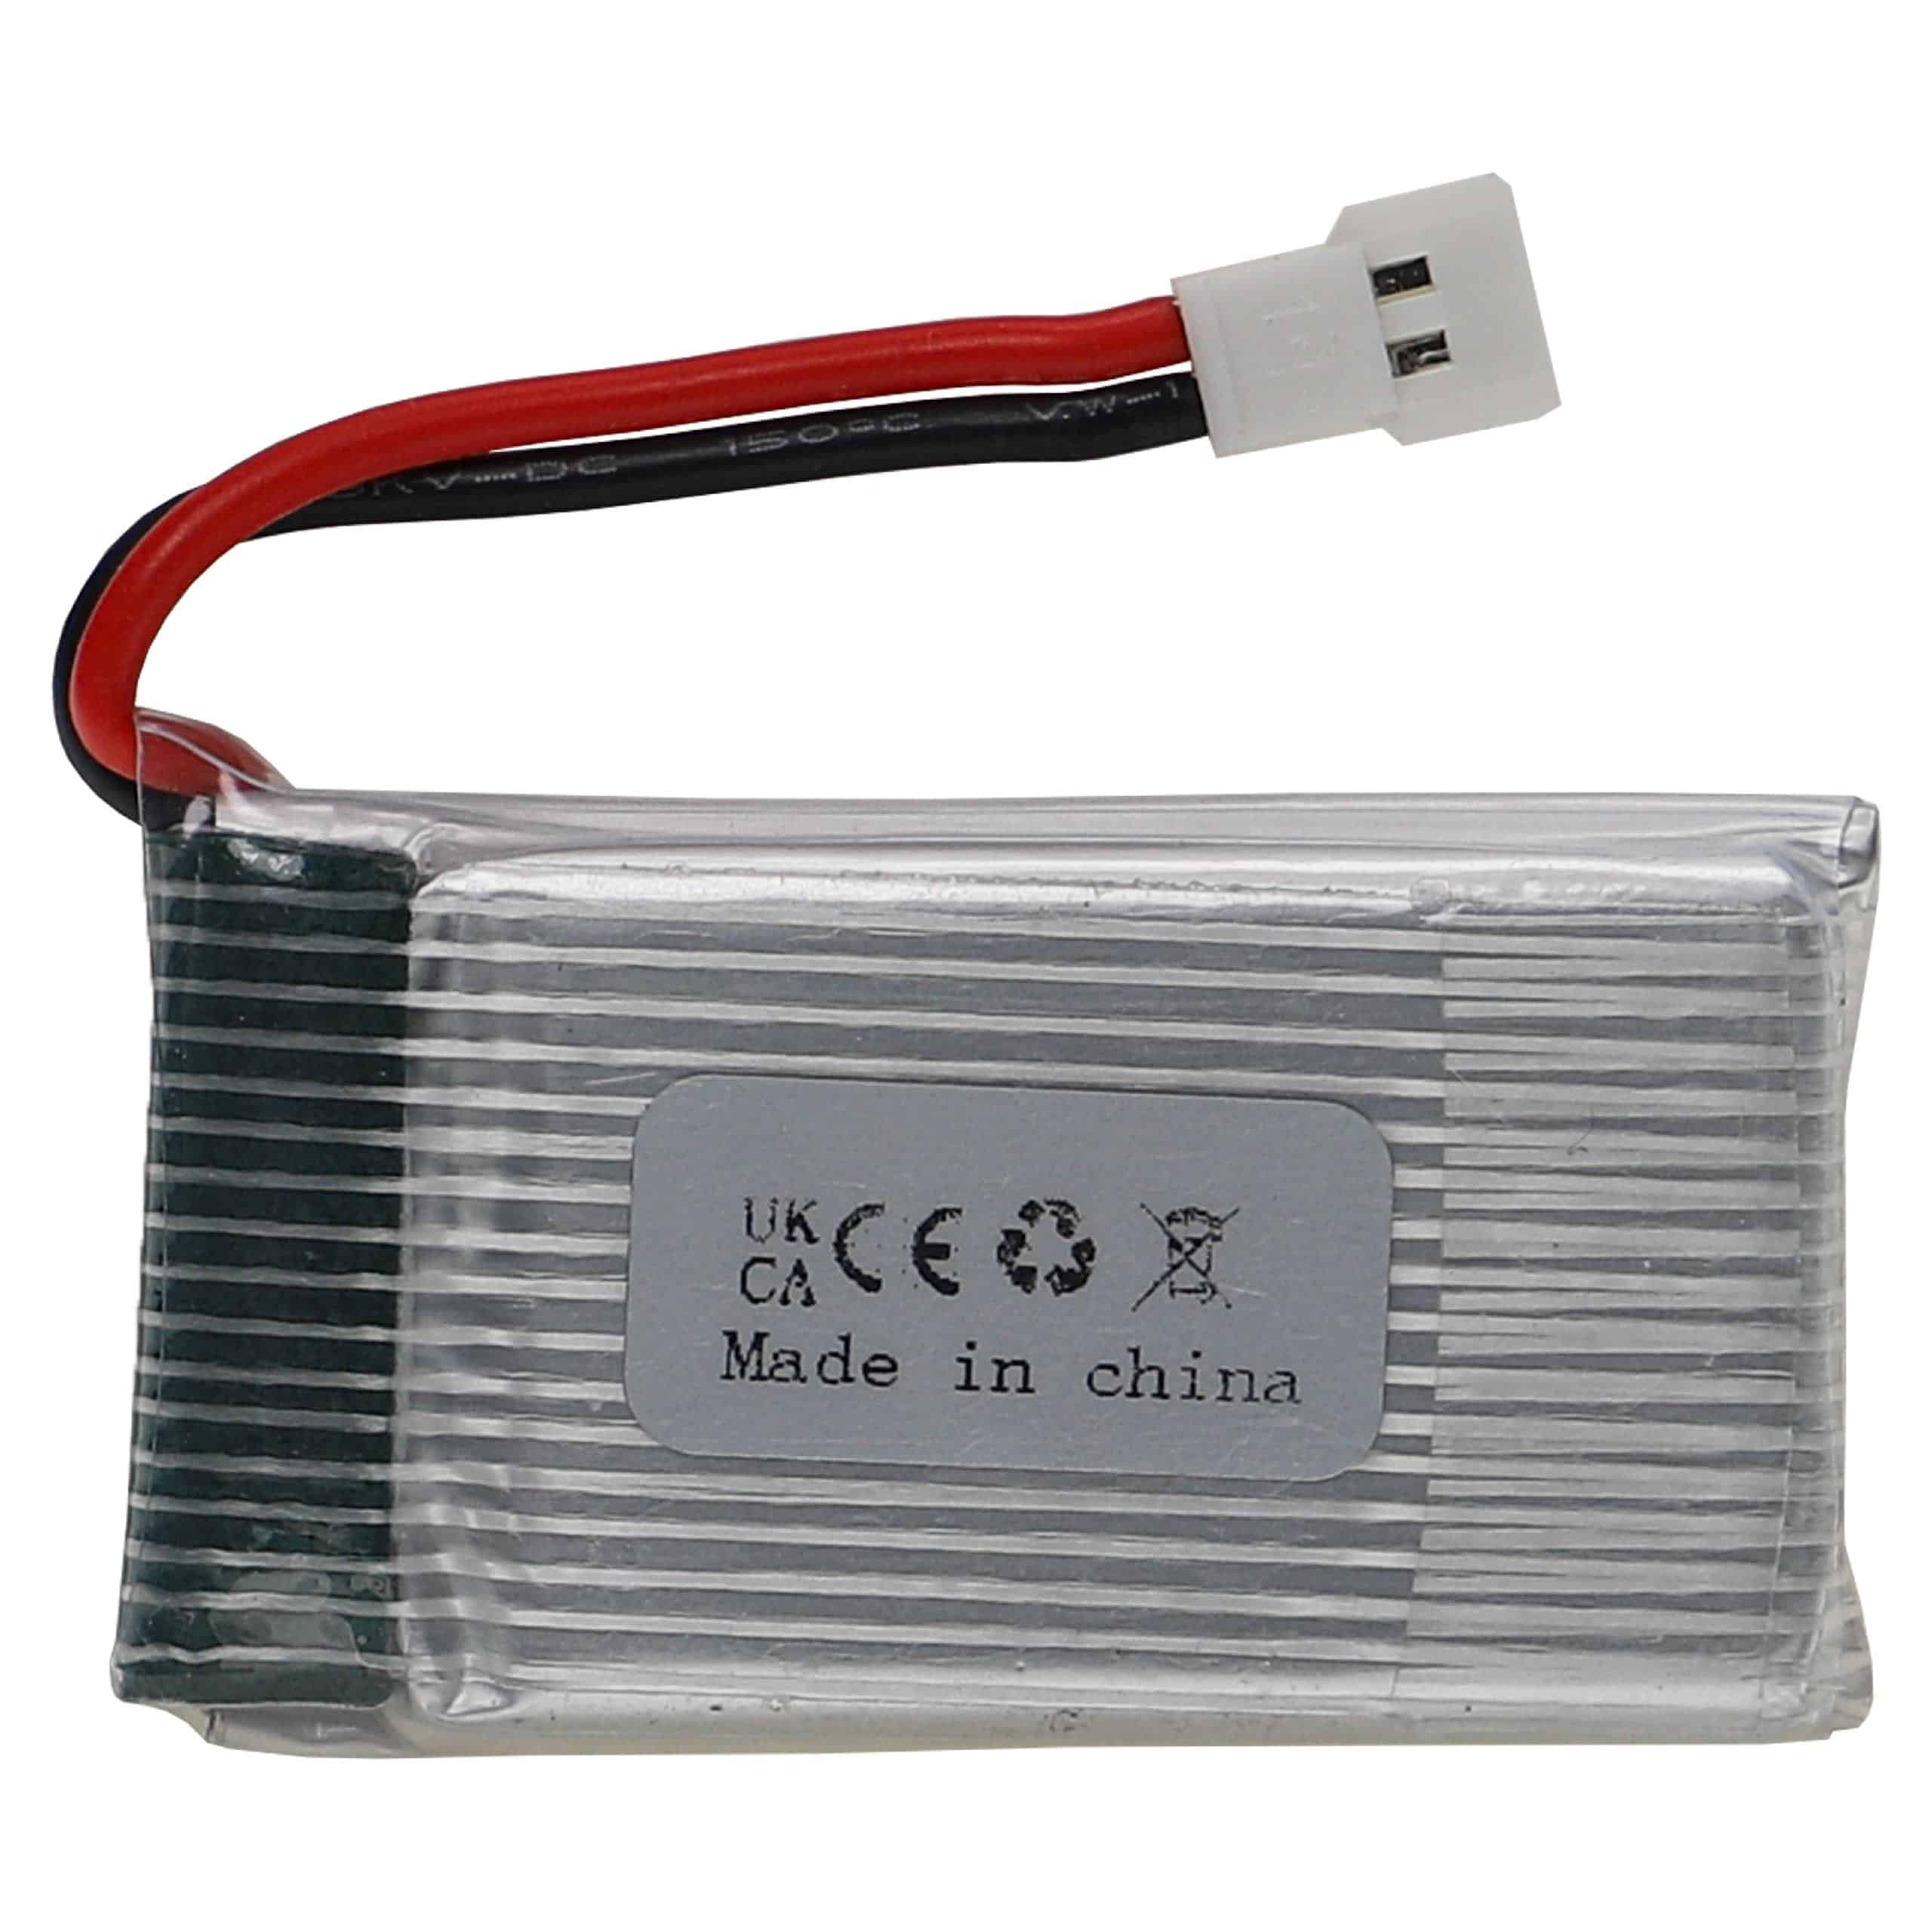 Batteria per modellini RC - 720mAh 3,7V Li-Poly, XH 2.54 2P